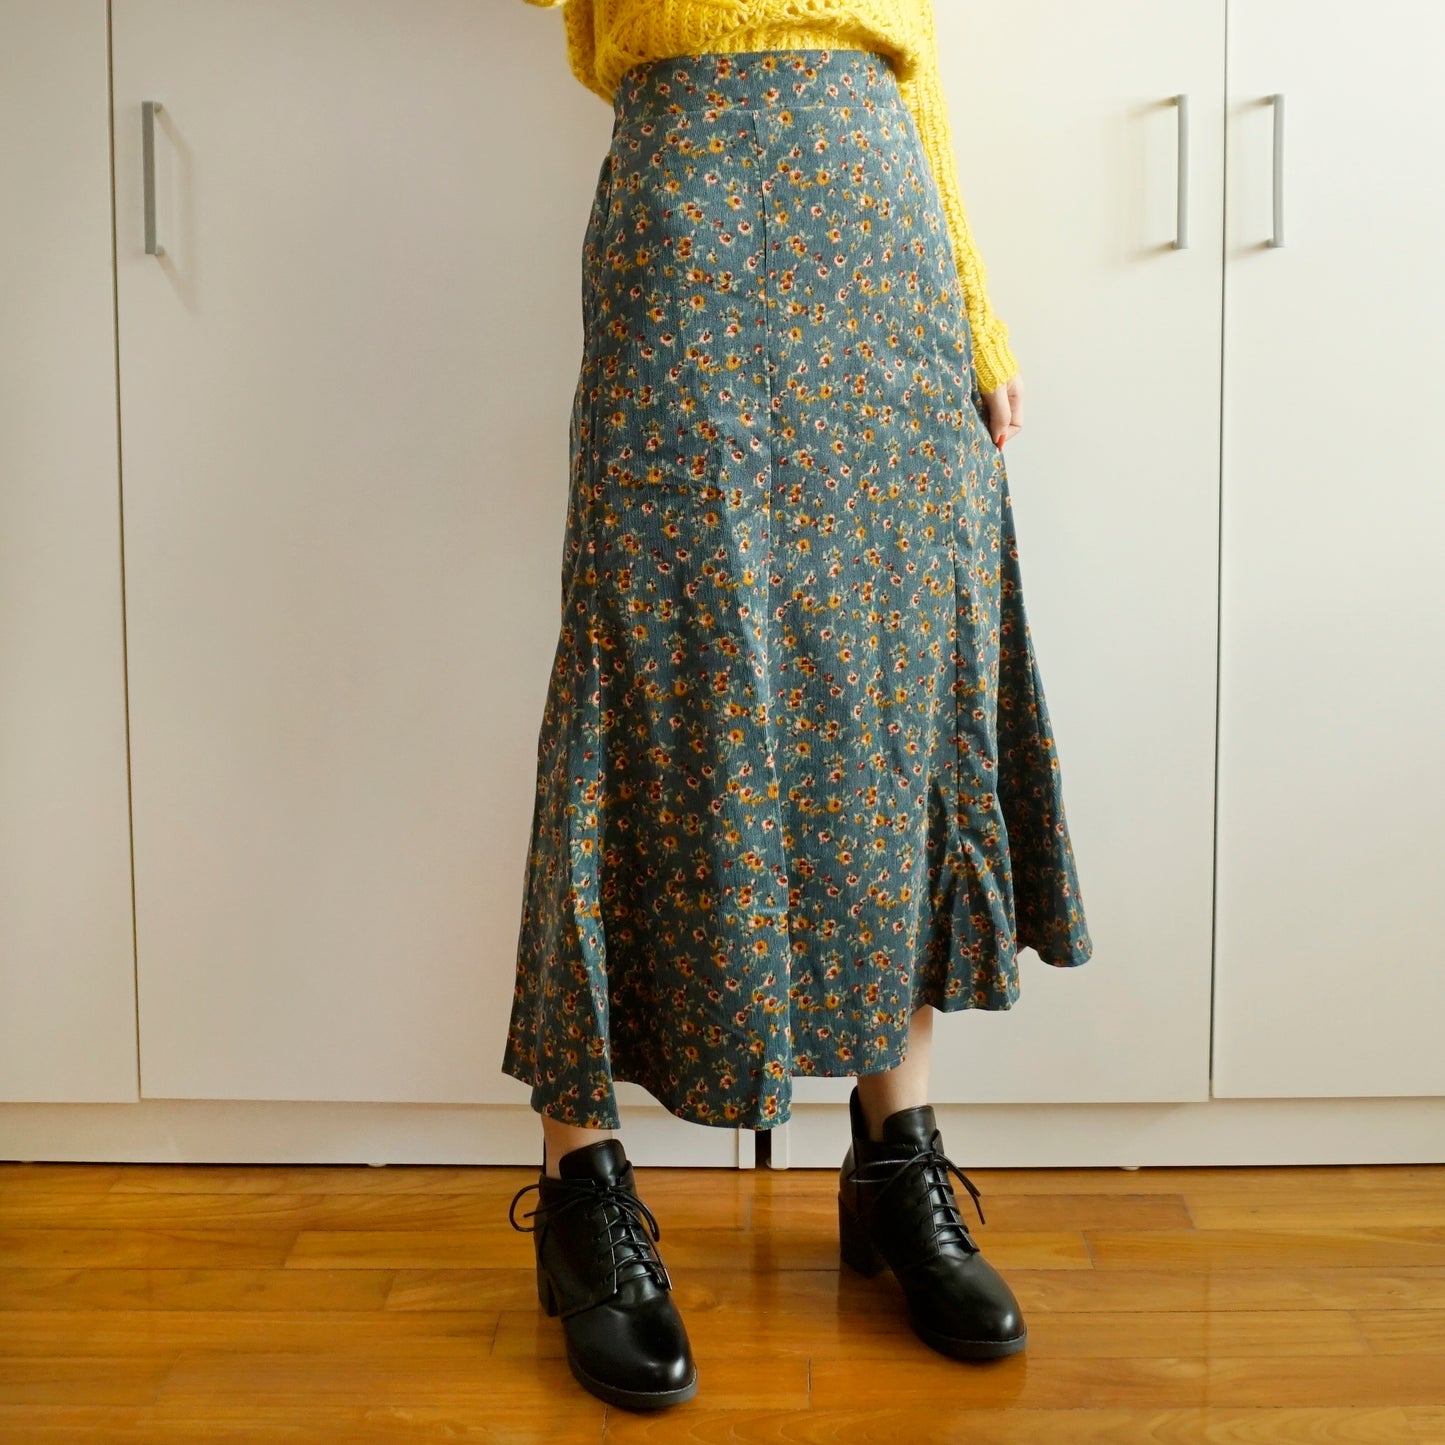 Corduroy Ditsy Floral Midi Skirt (3 Colors)